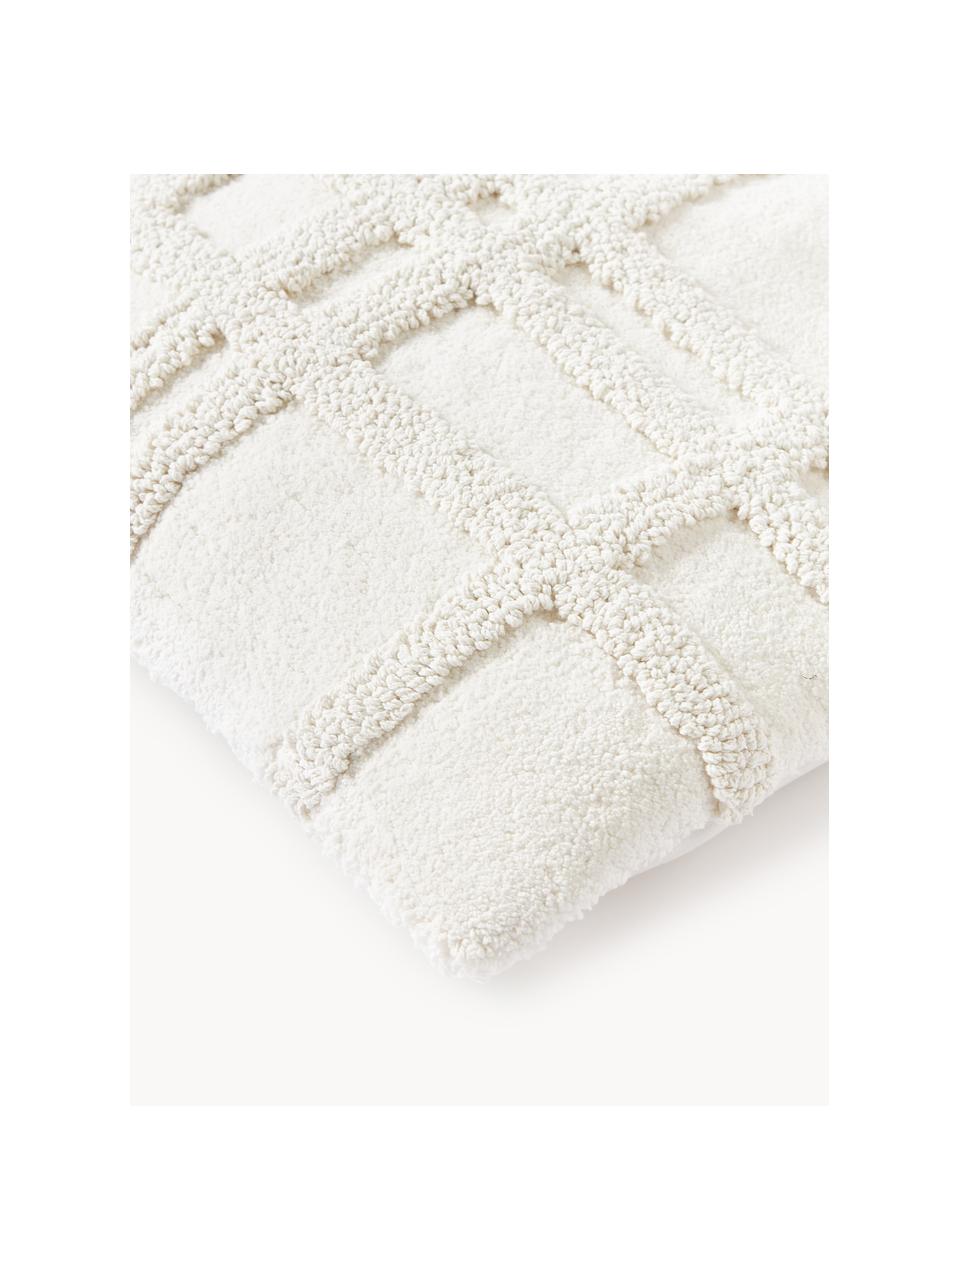 Baumwoll-Kissenhülle Sloane mit getuftetem Karo-Muster, 93 % Baumwolle, 6 % Polyester, 1 % Viscose, Off White, B 50 x L 50